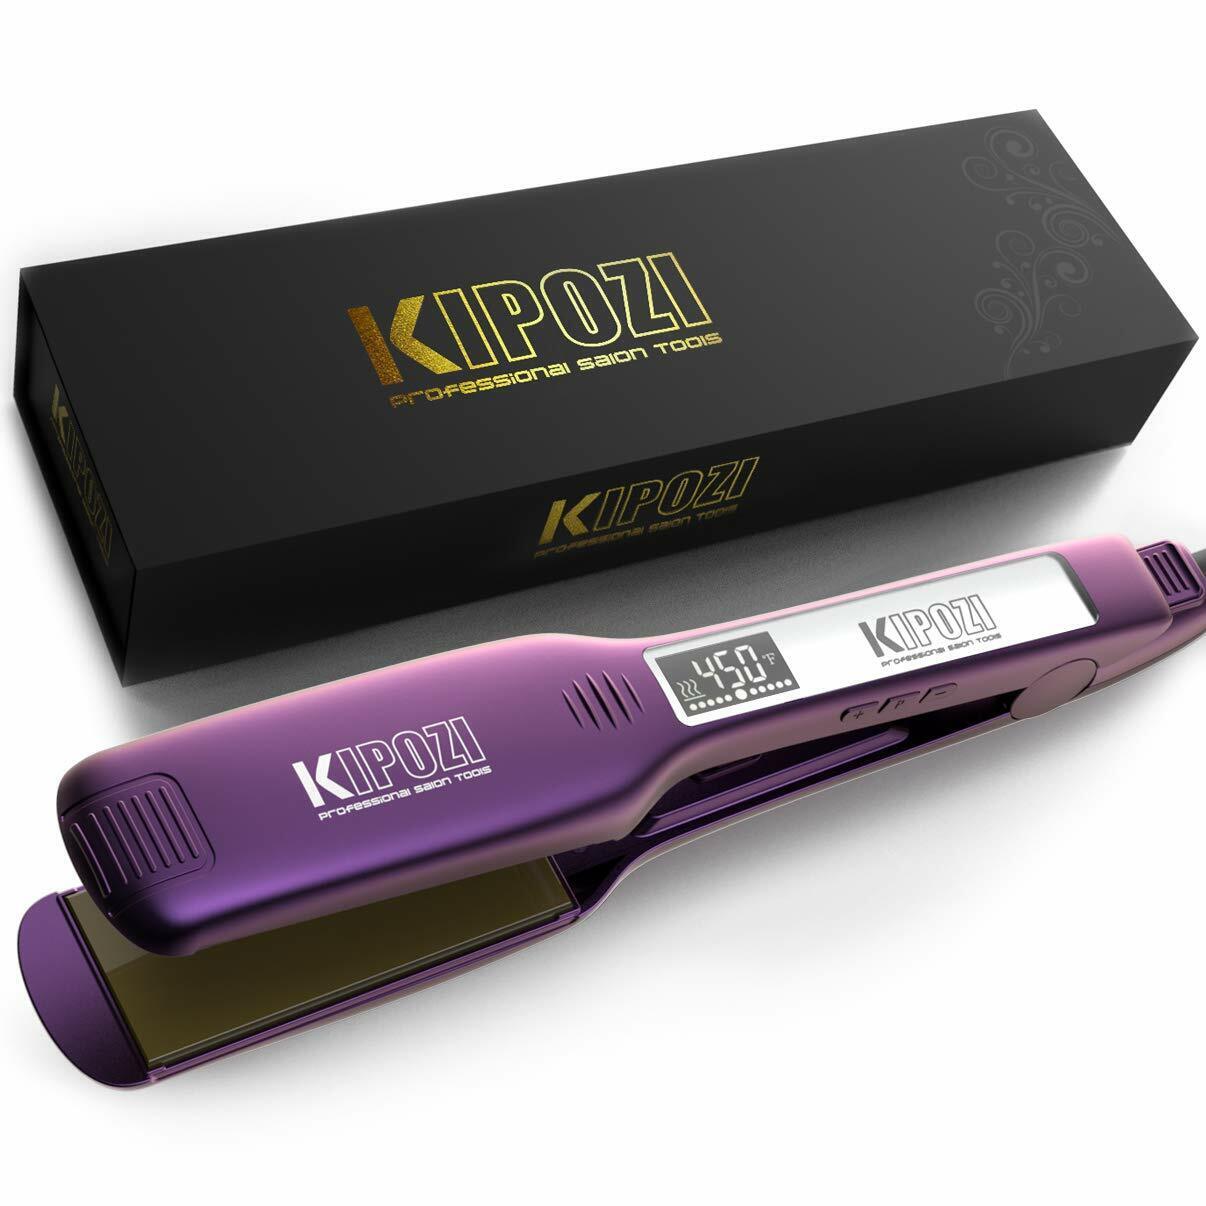 KIPOZI Salon Hair Straightener 1.75 Inch Wide Voltage Digital Display Purple KIPOZI Does Not Apply